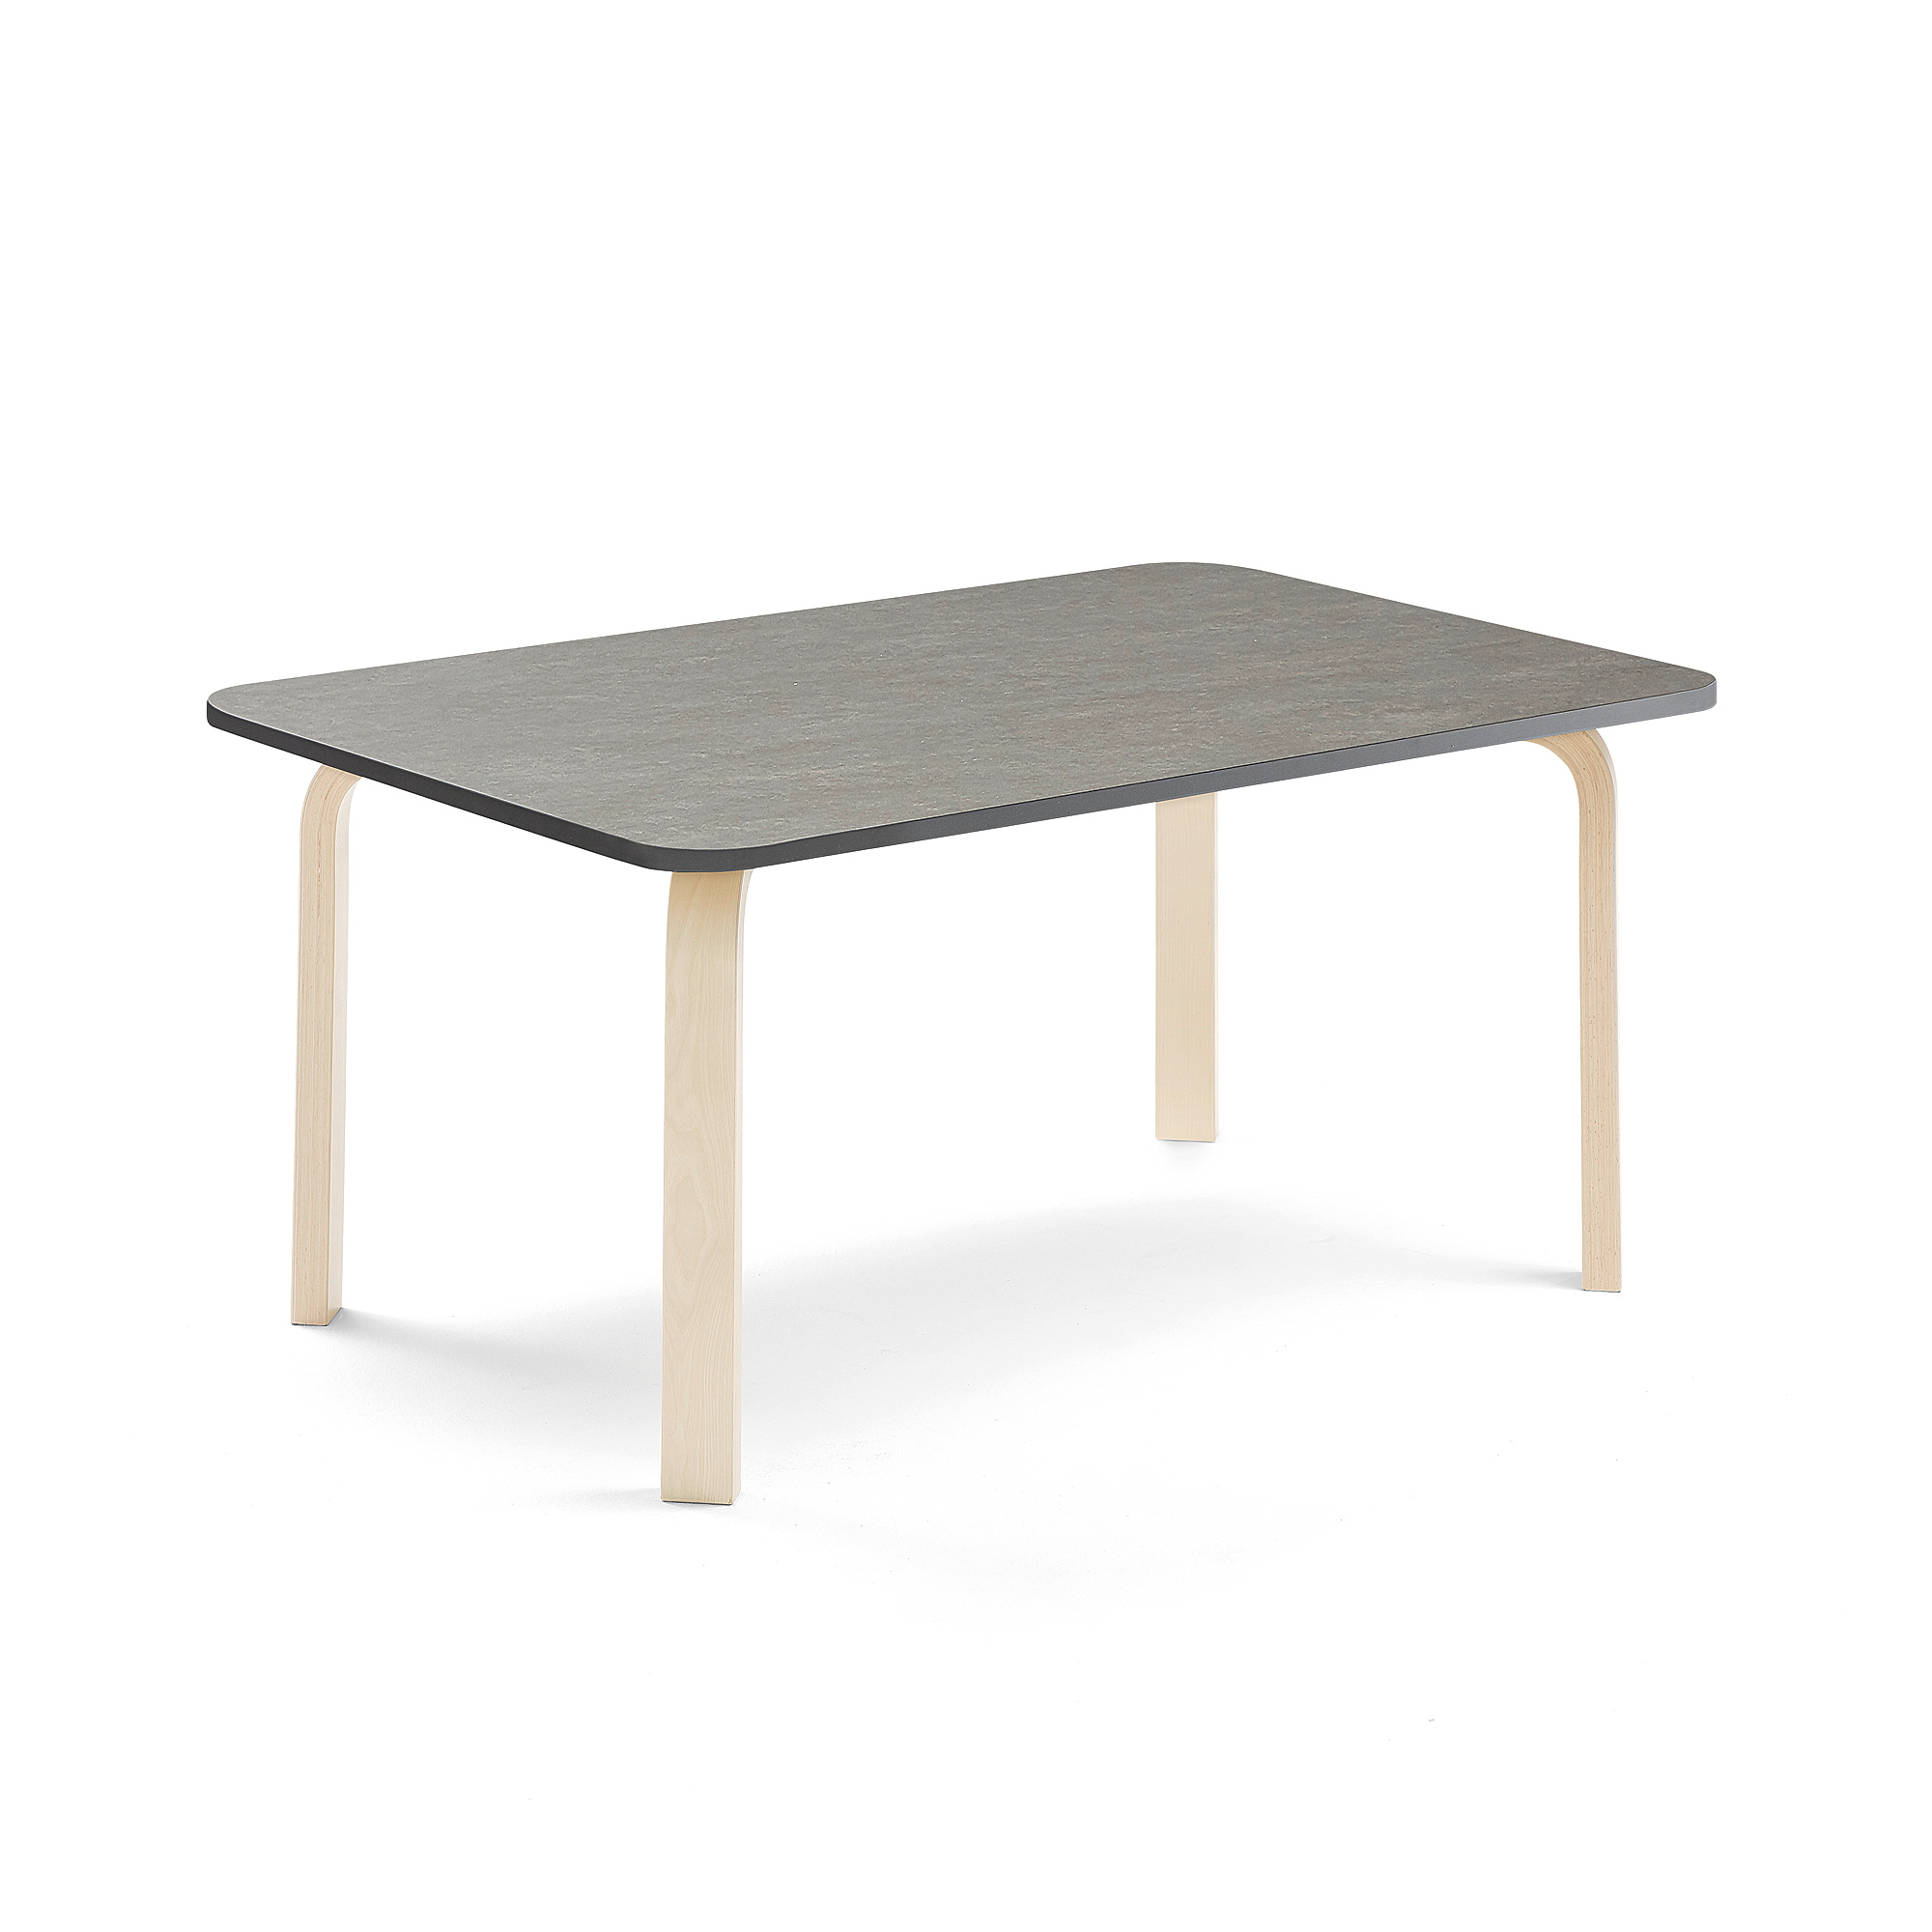 Stůl ELTON, 1200x600x530 mm, bříza, akustické linoleum, tmavě šedá